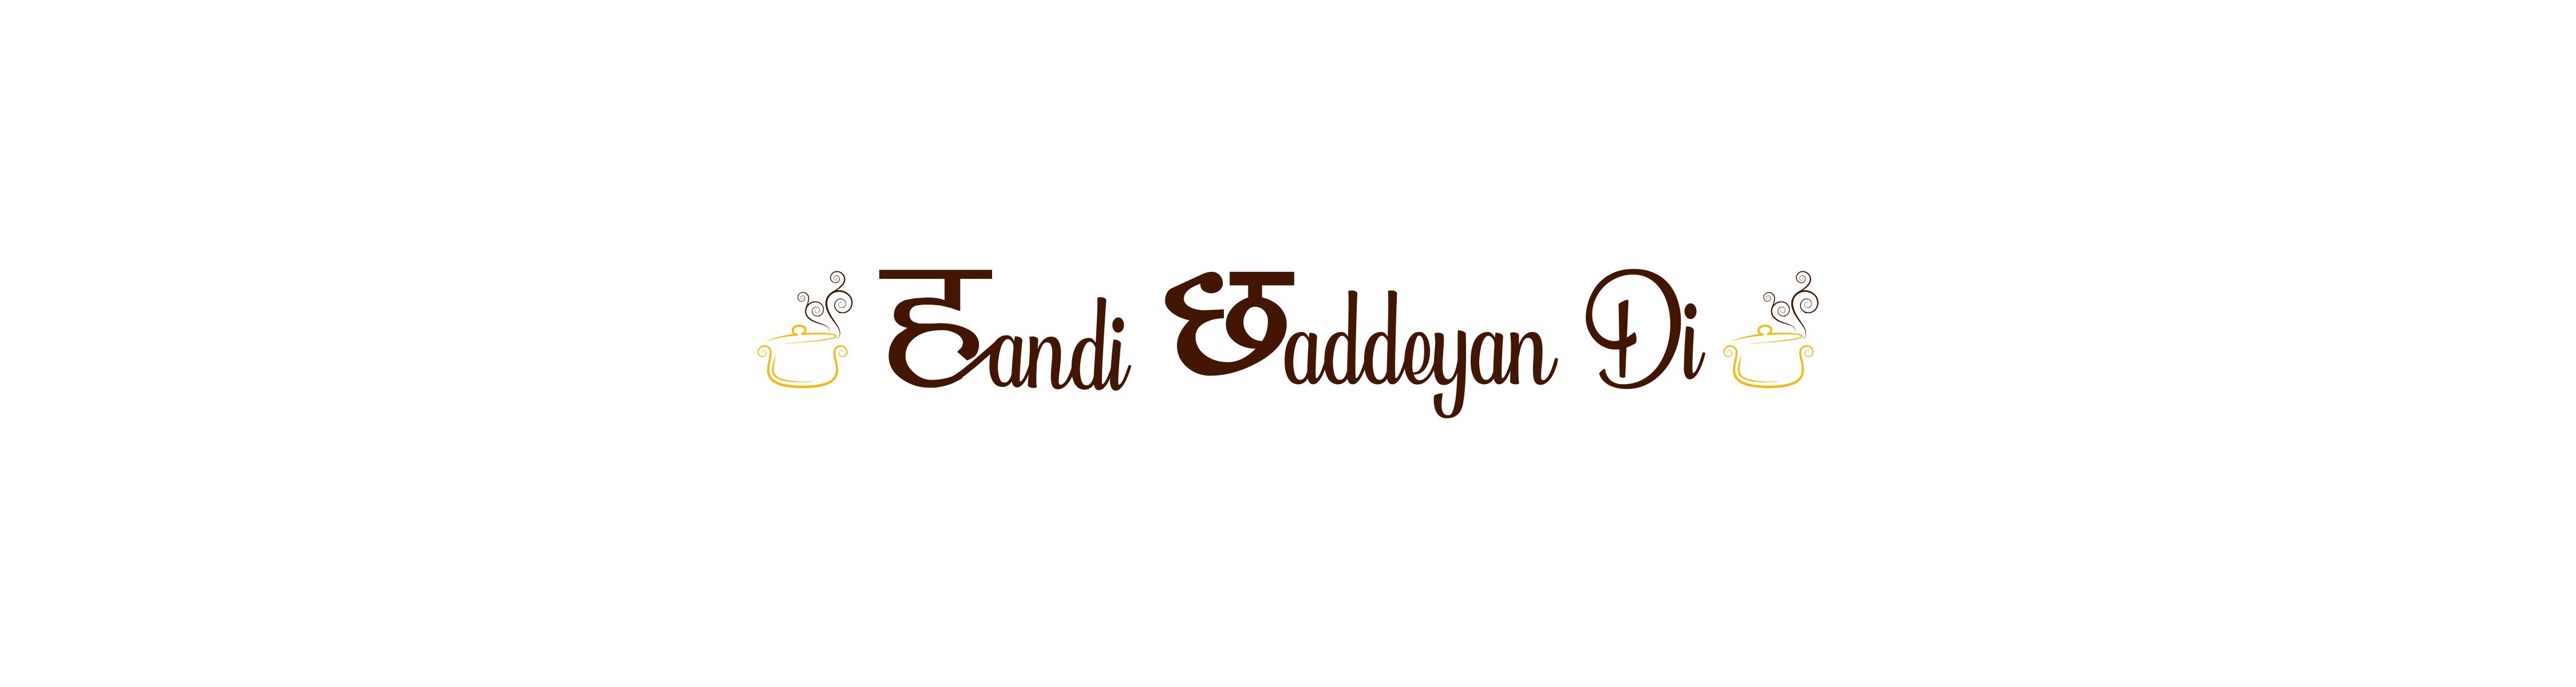 Handi Chhadeyan Di (RB Foods) logo